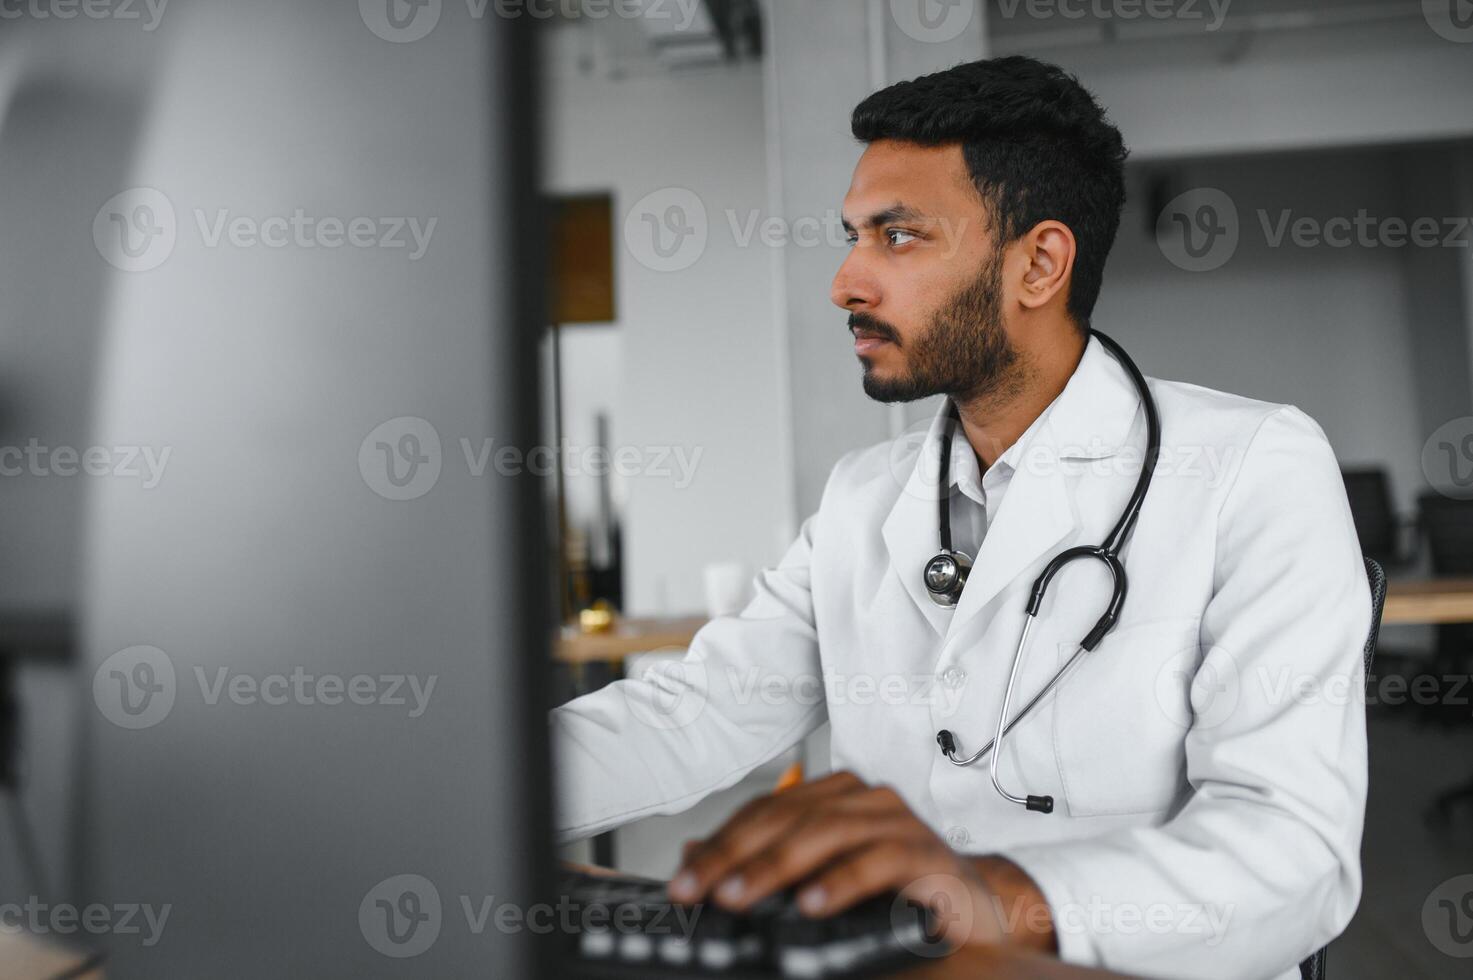 gente, ocupación y medicina concepto. sonriente masculino indio árabe médico en blanco abrigo, sentado en médico oficina a escritorio con ordenador portátil foto